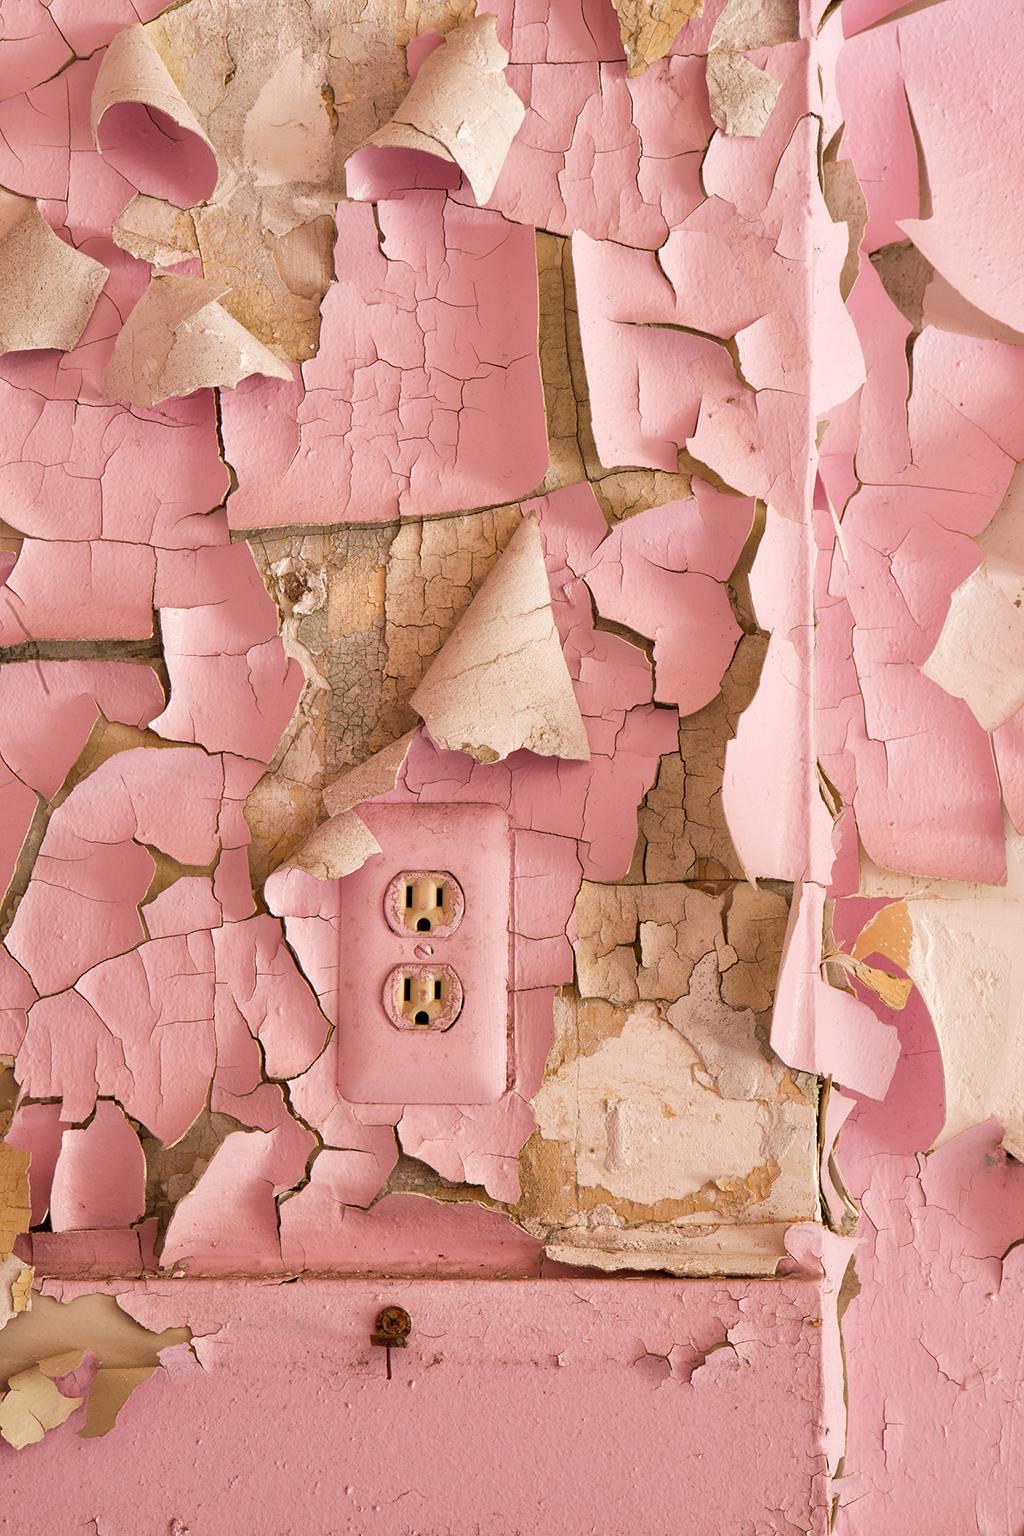 "Linger", abandoned, peeling paint, outlet, metal print, pink, color photograph